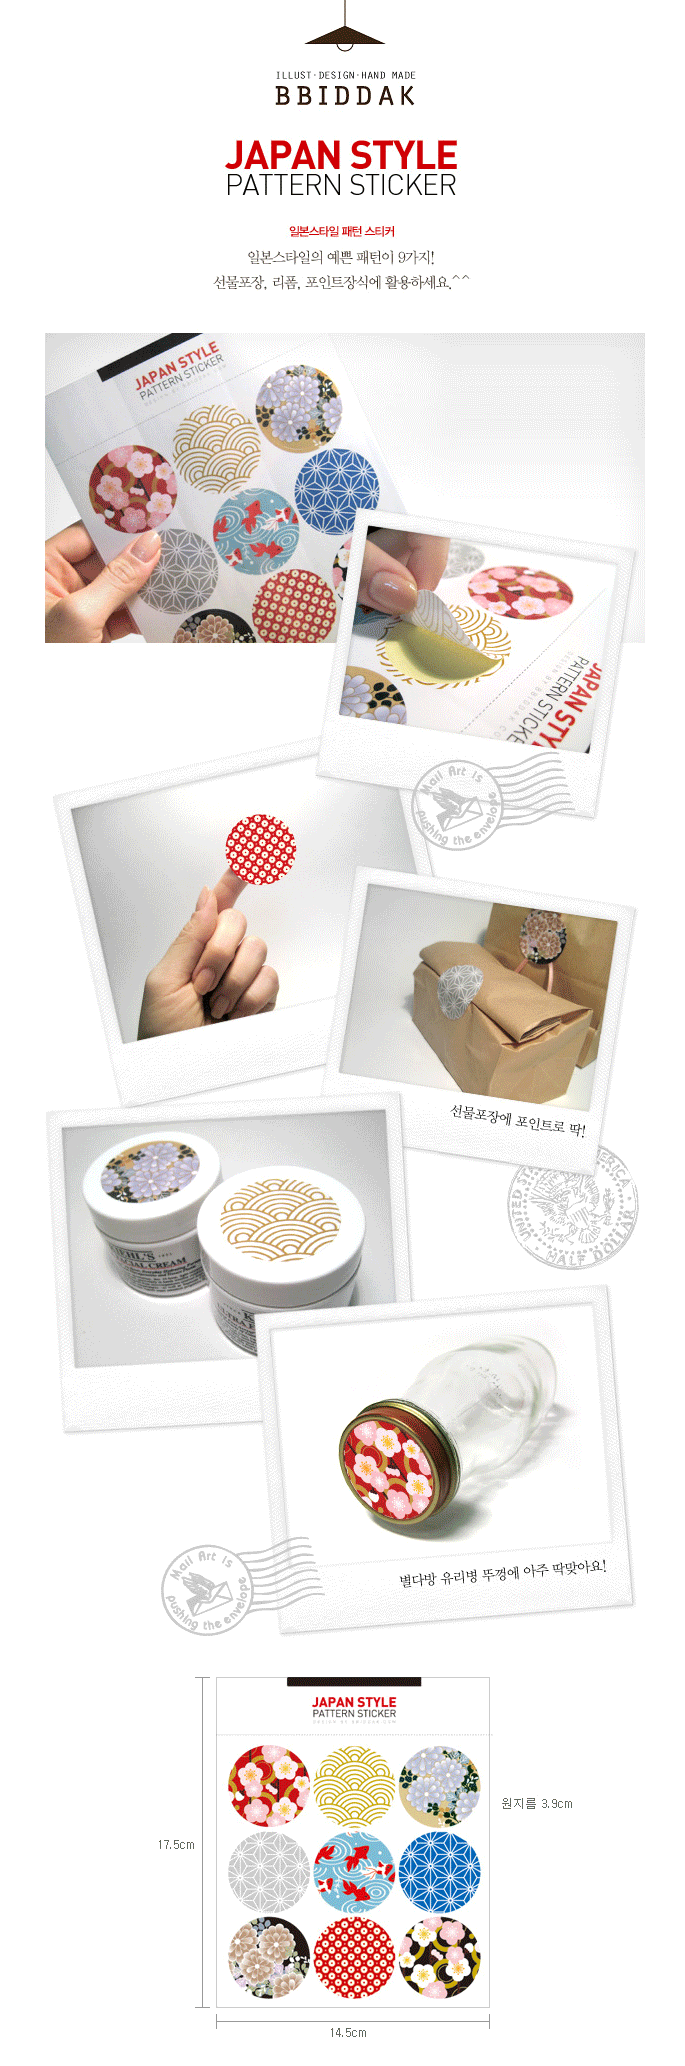 bbiddak's japan pattern stickers [gorgeous stationery, lovely stationery, beautiful stationery]